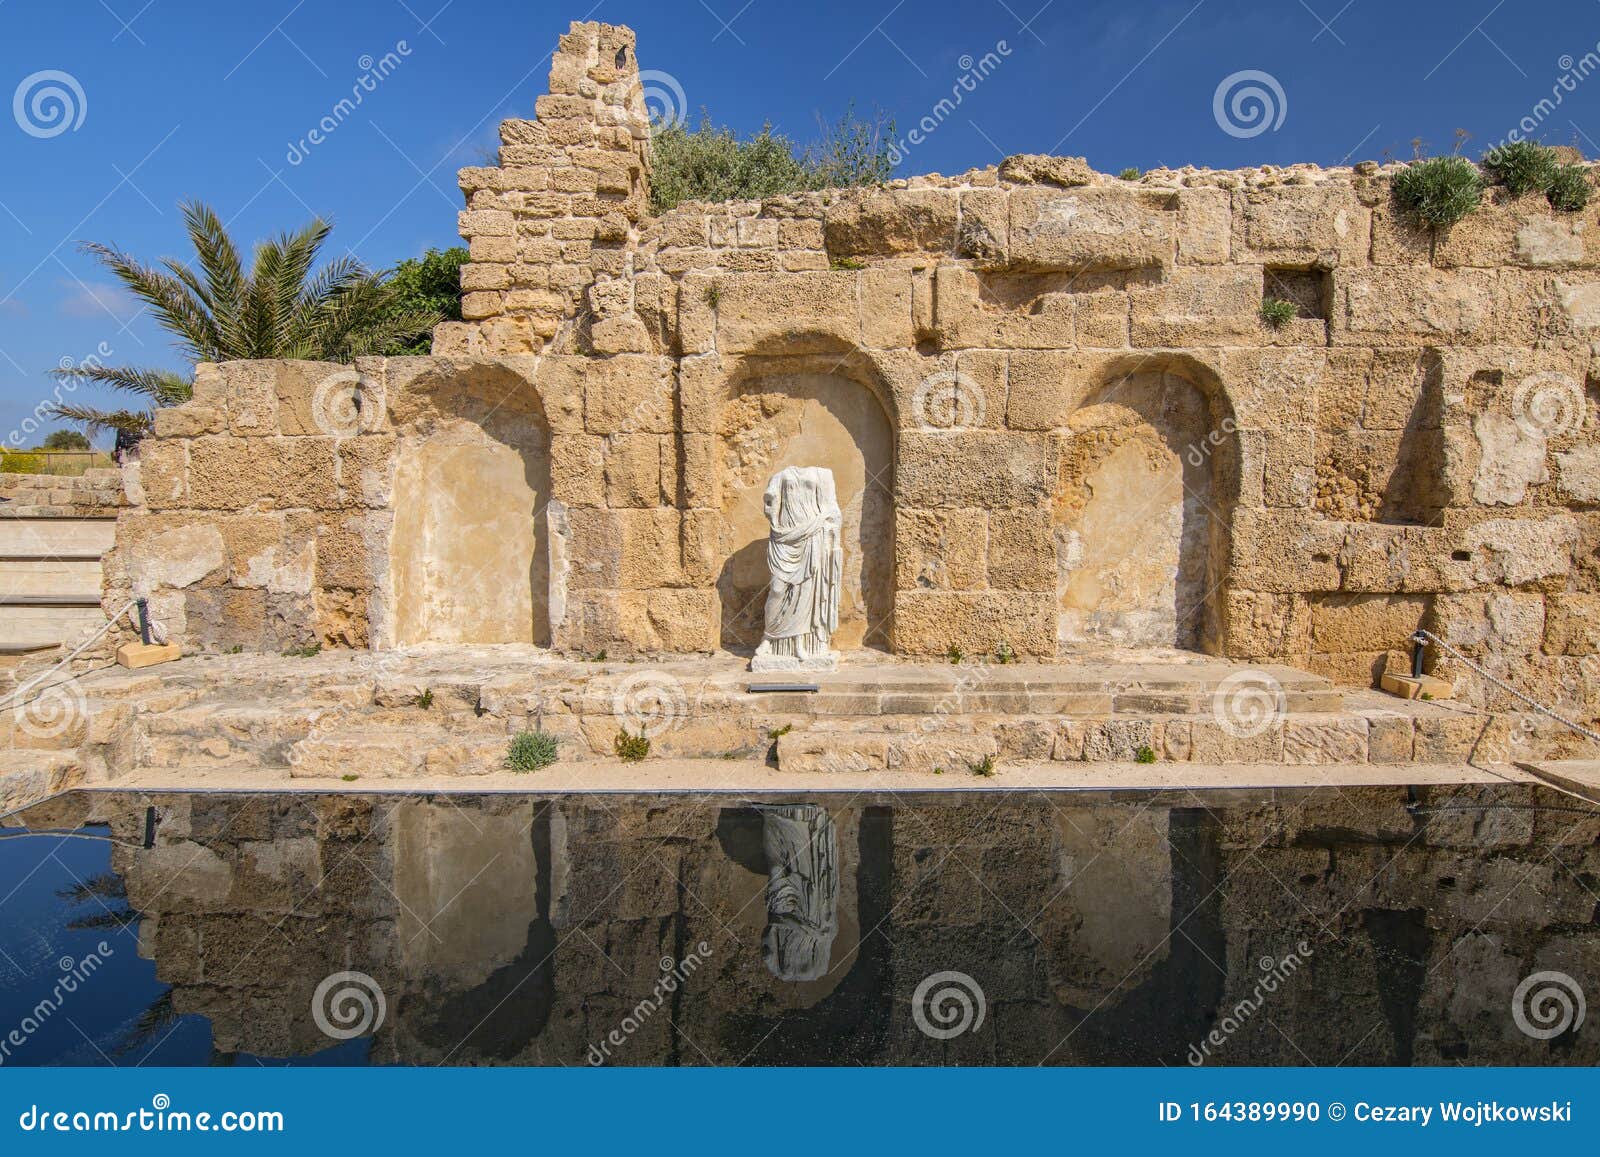 Ancient Statue At Caesarea Maritima National Park, Israel 